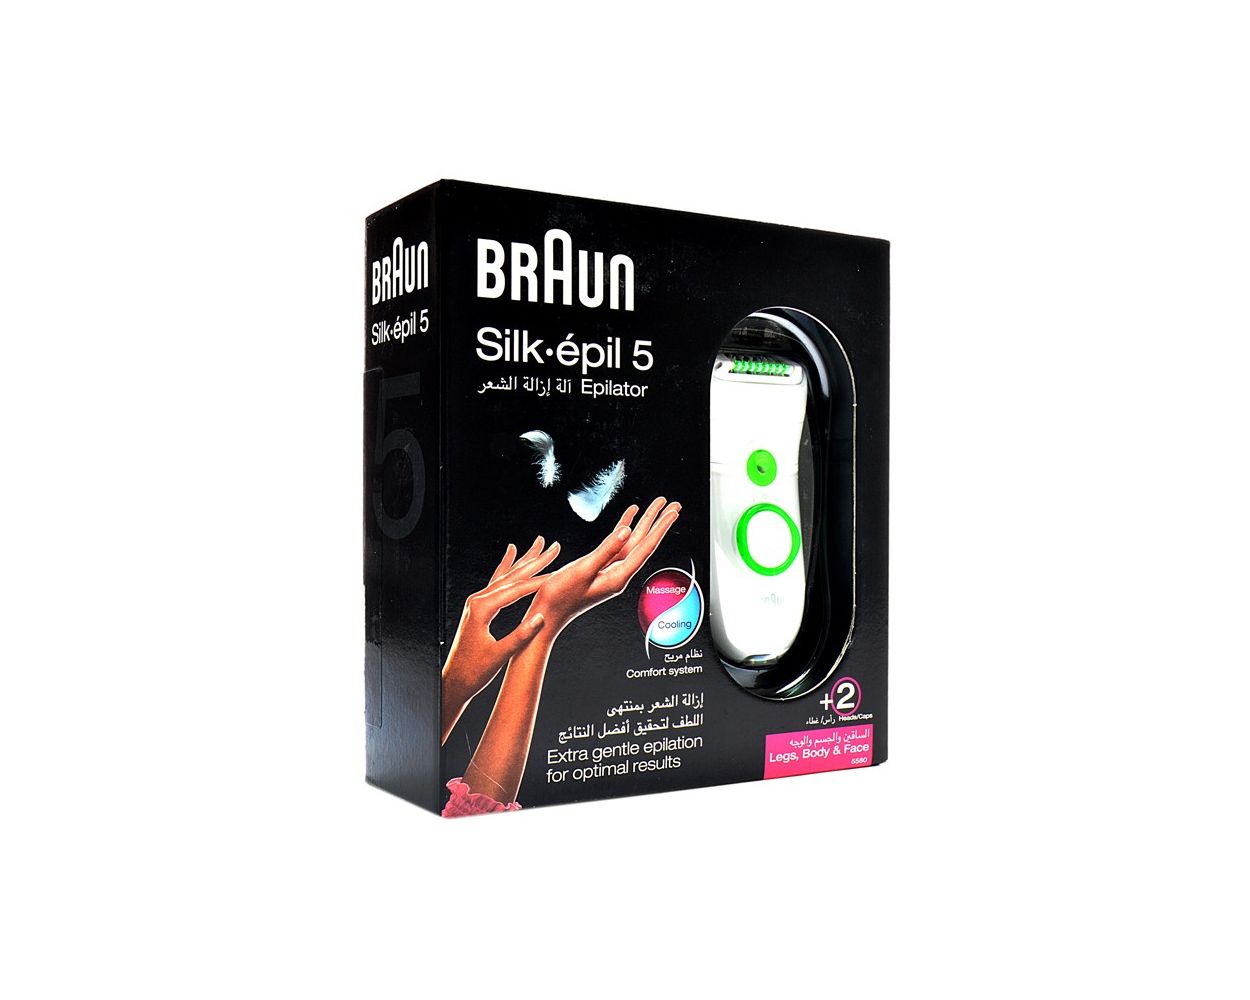 Repulsion ethical Awareness Braun Epilator Silk.epil 5 (5580) - 2 Hours Free Delivery Anywhere in  Karachi Pakistan